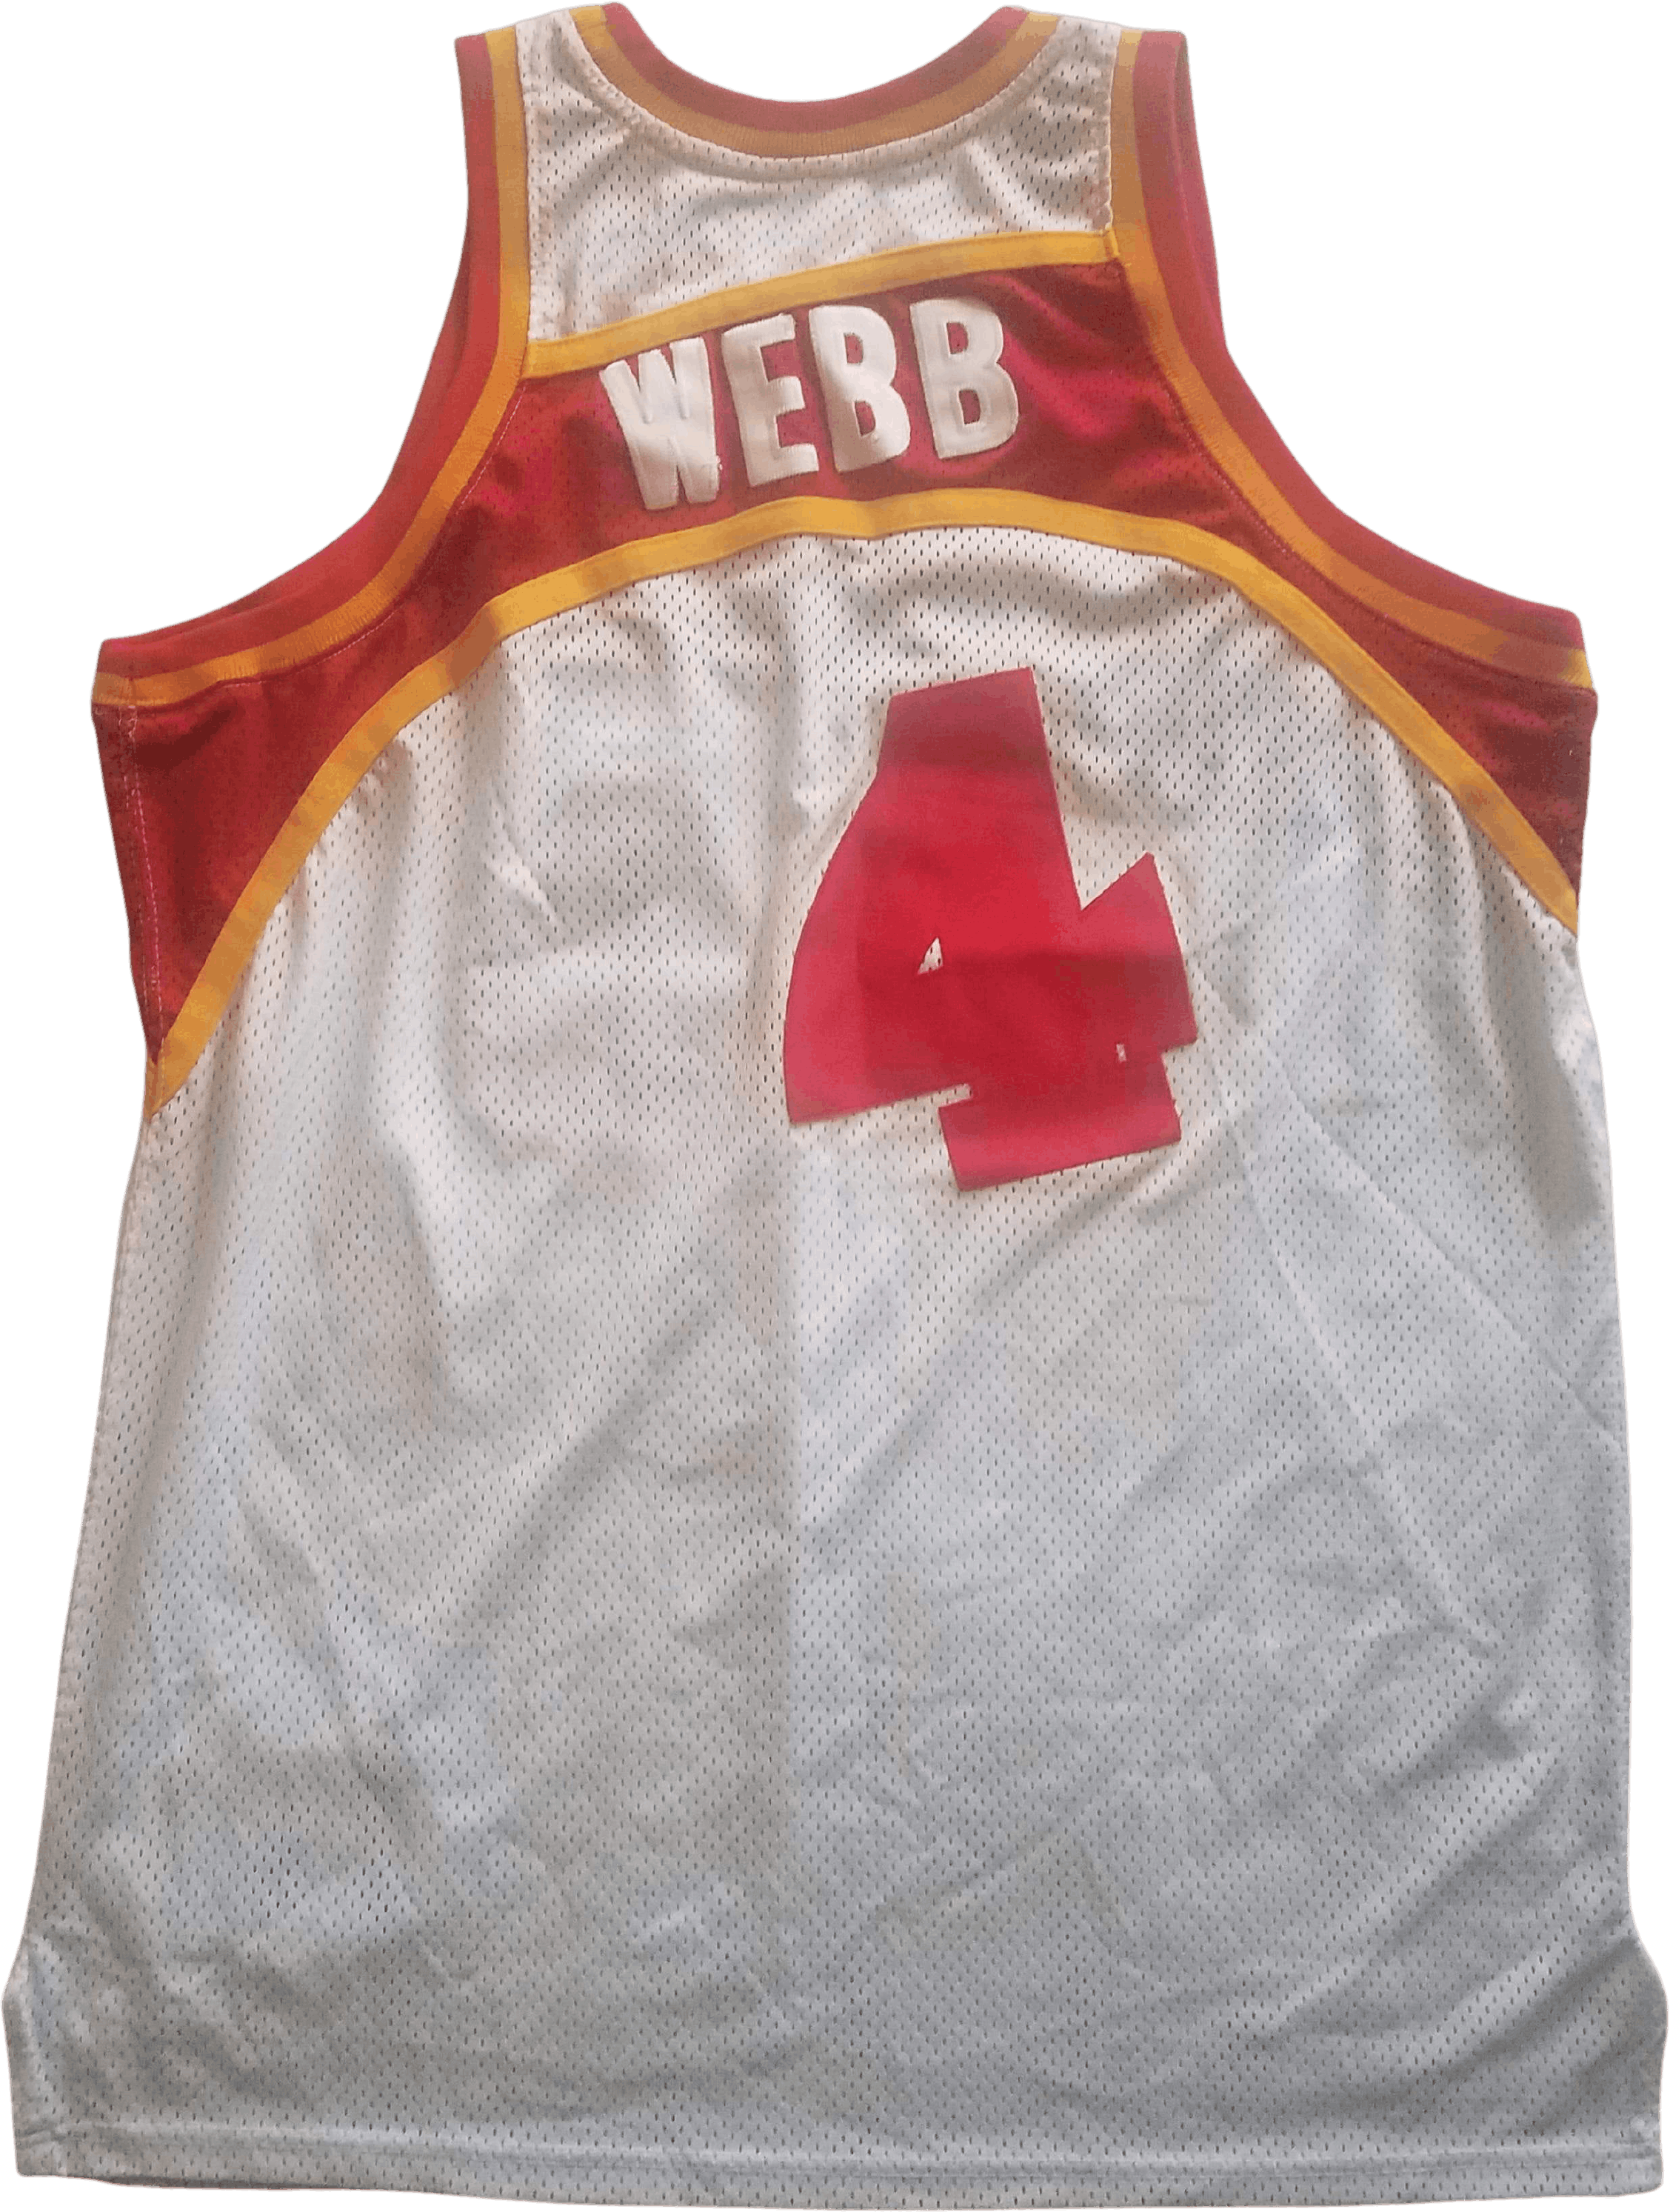 Spud Webb Signed Atlanta Pro Basketball Jersey - CharityStars